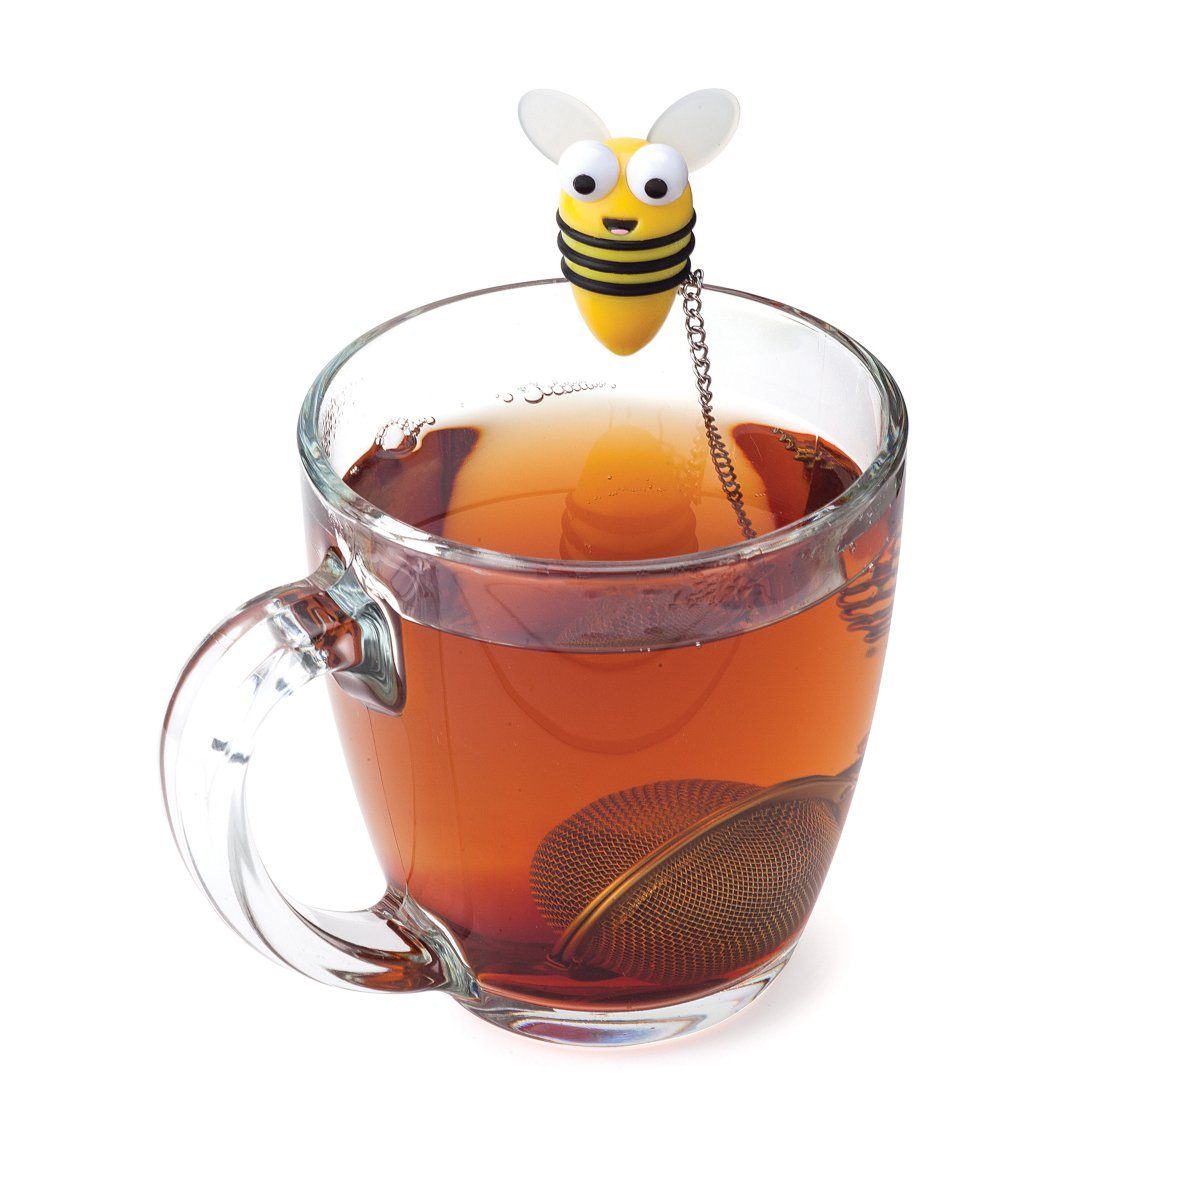 Joie Teeglas Tee-Ei Biene, Kunststoff (lebensmittelsicher), Edelstahl